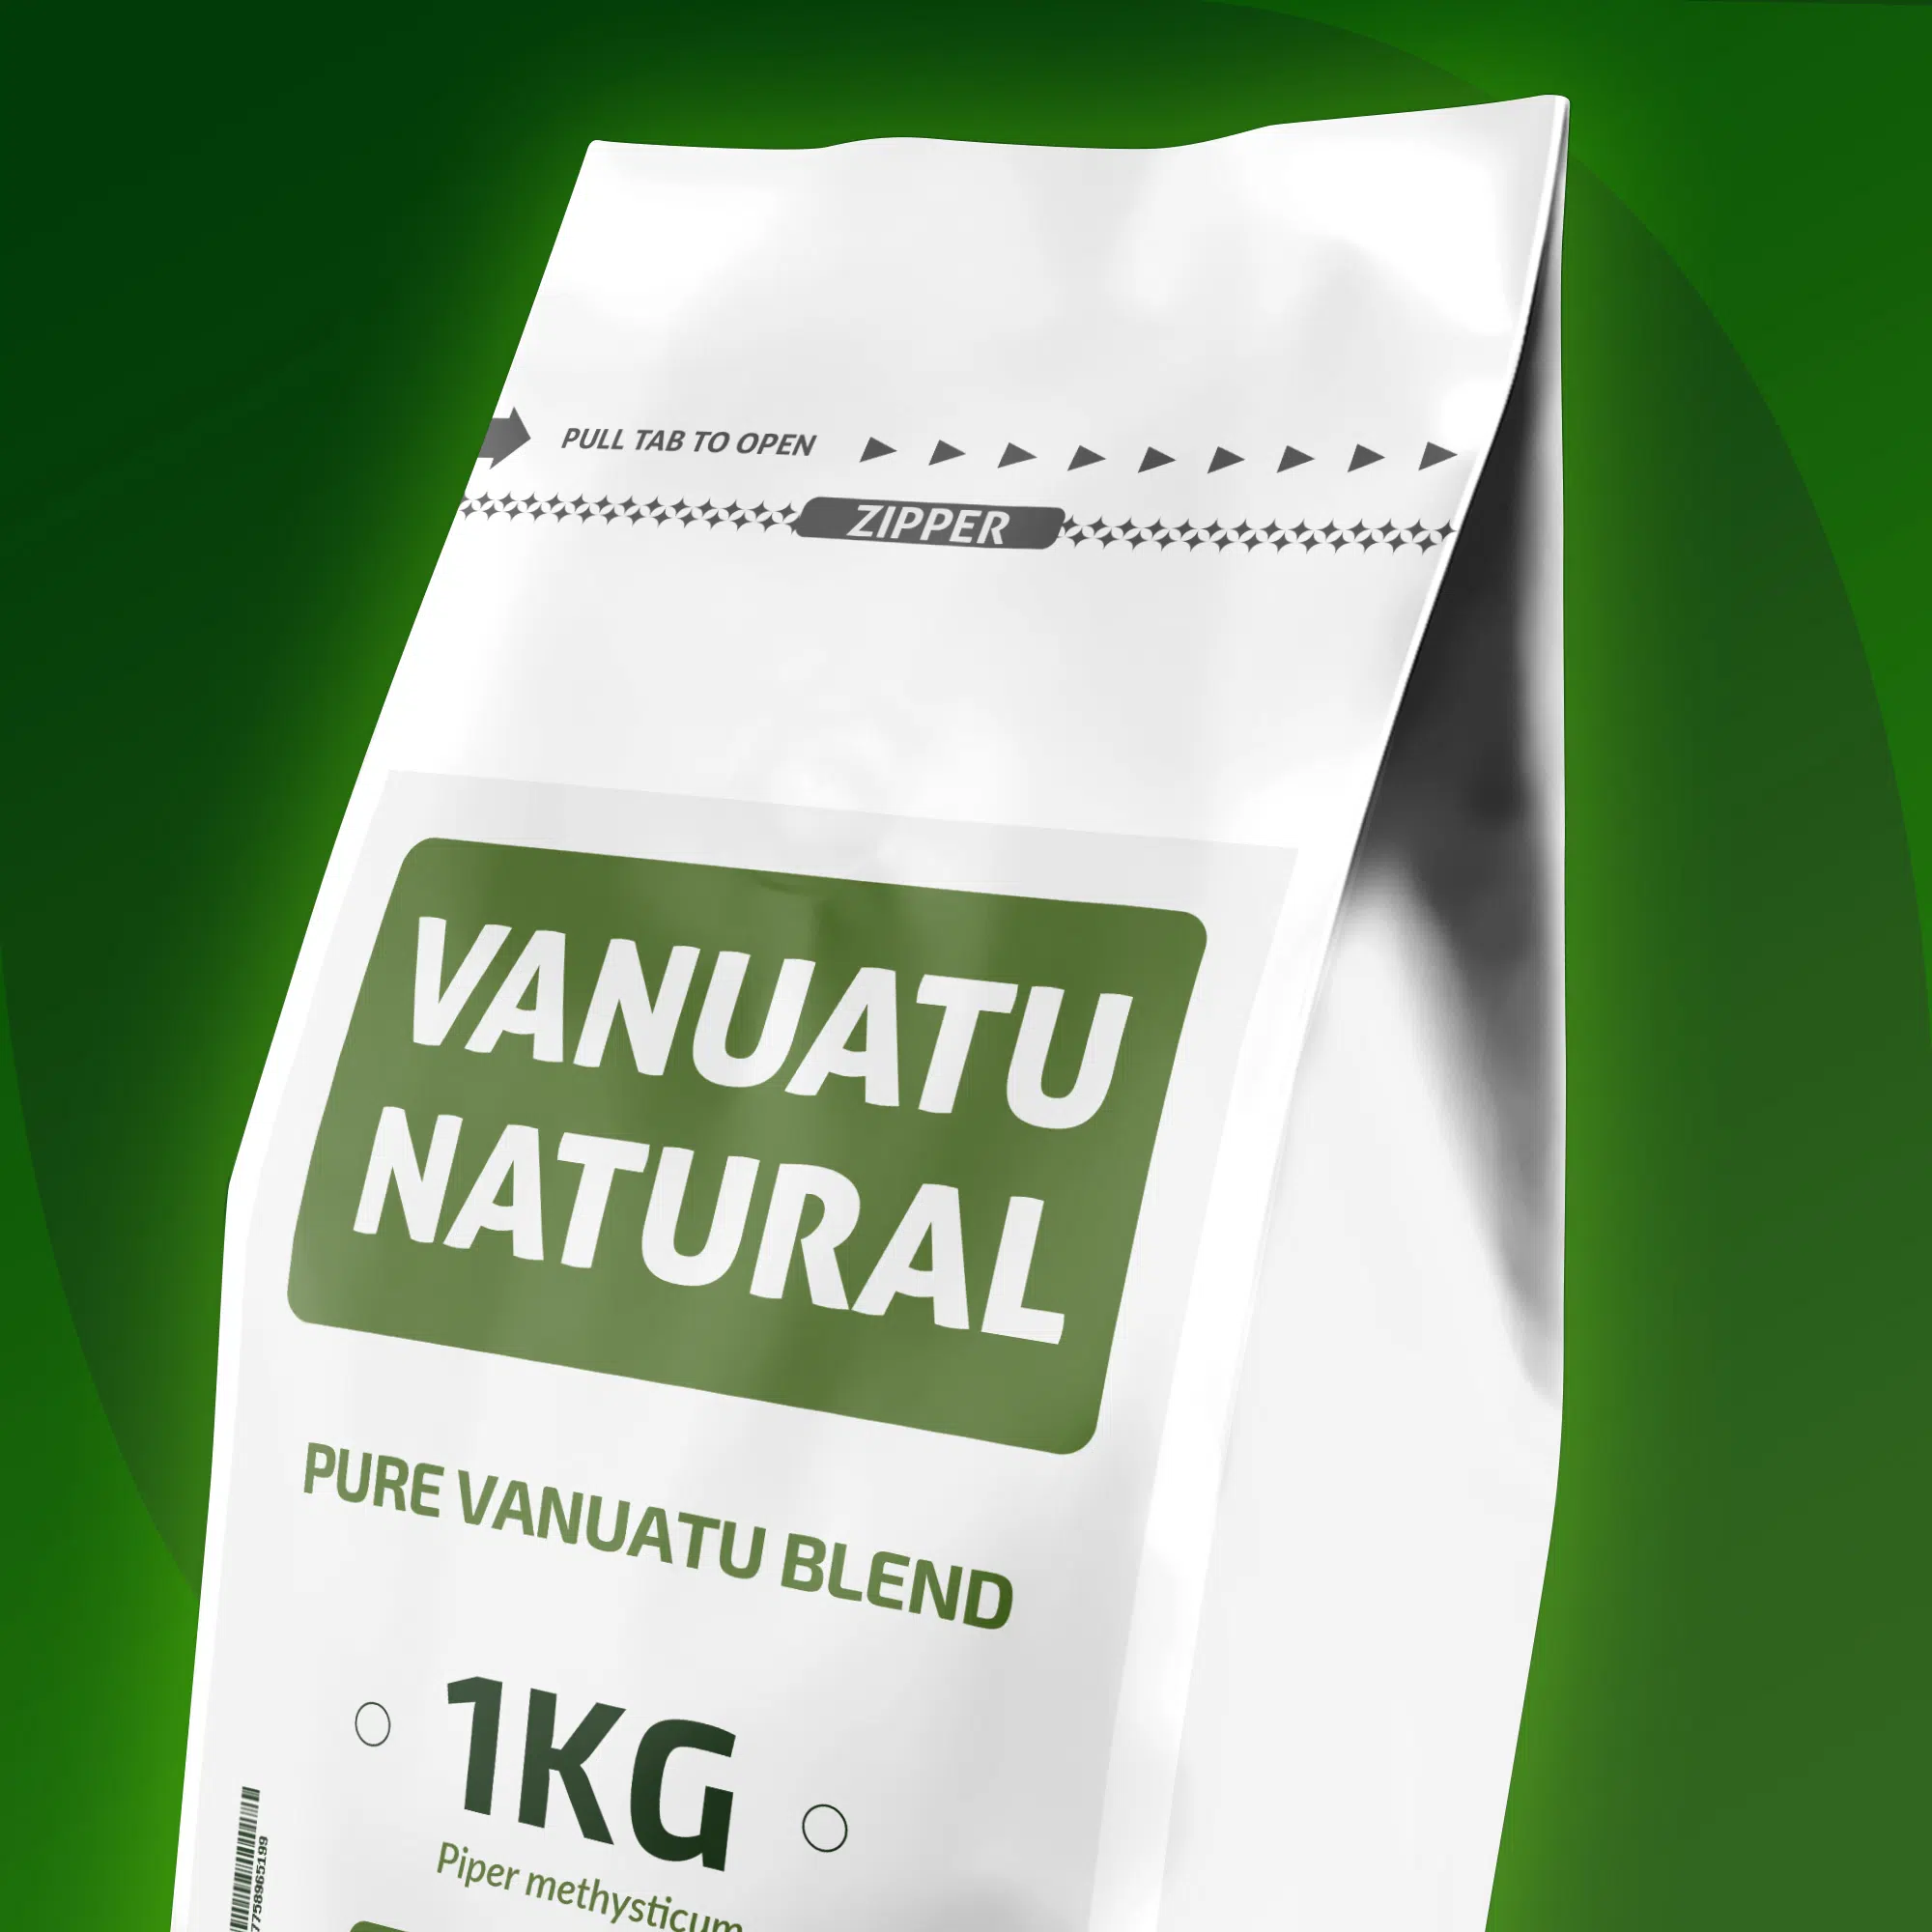 Vanuatu Natural - Australia Kava Shop